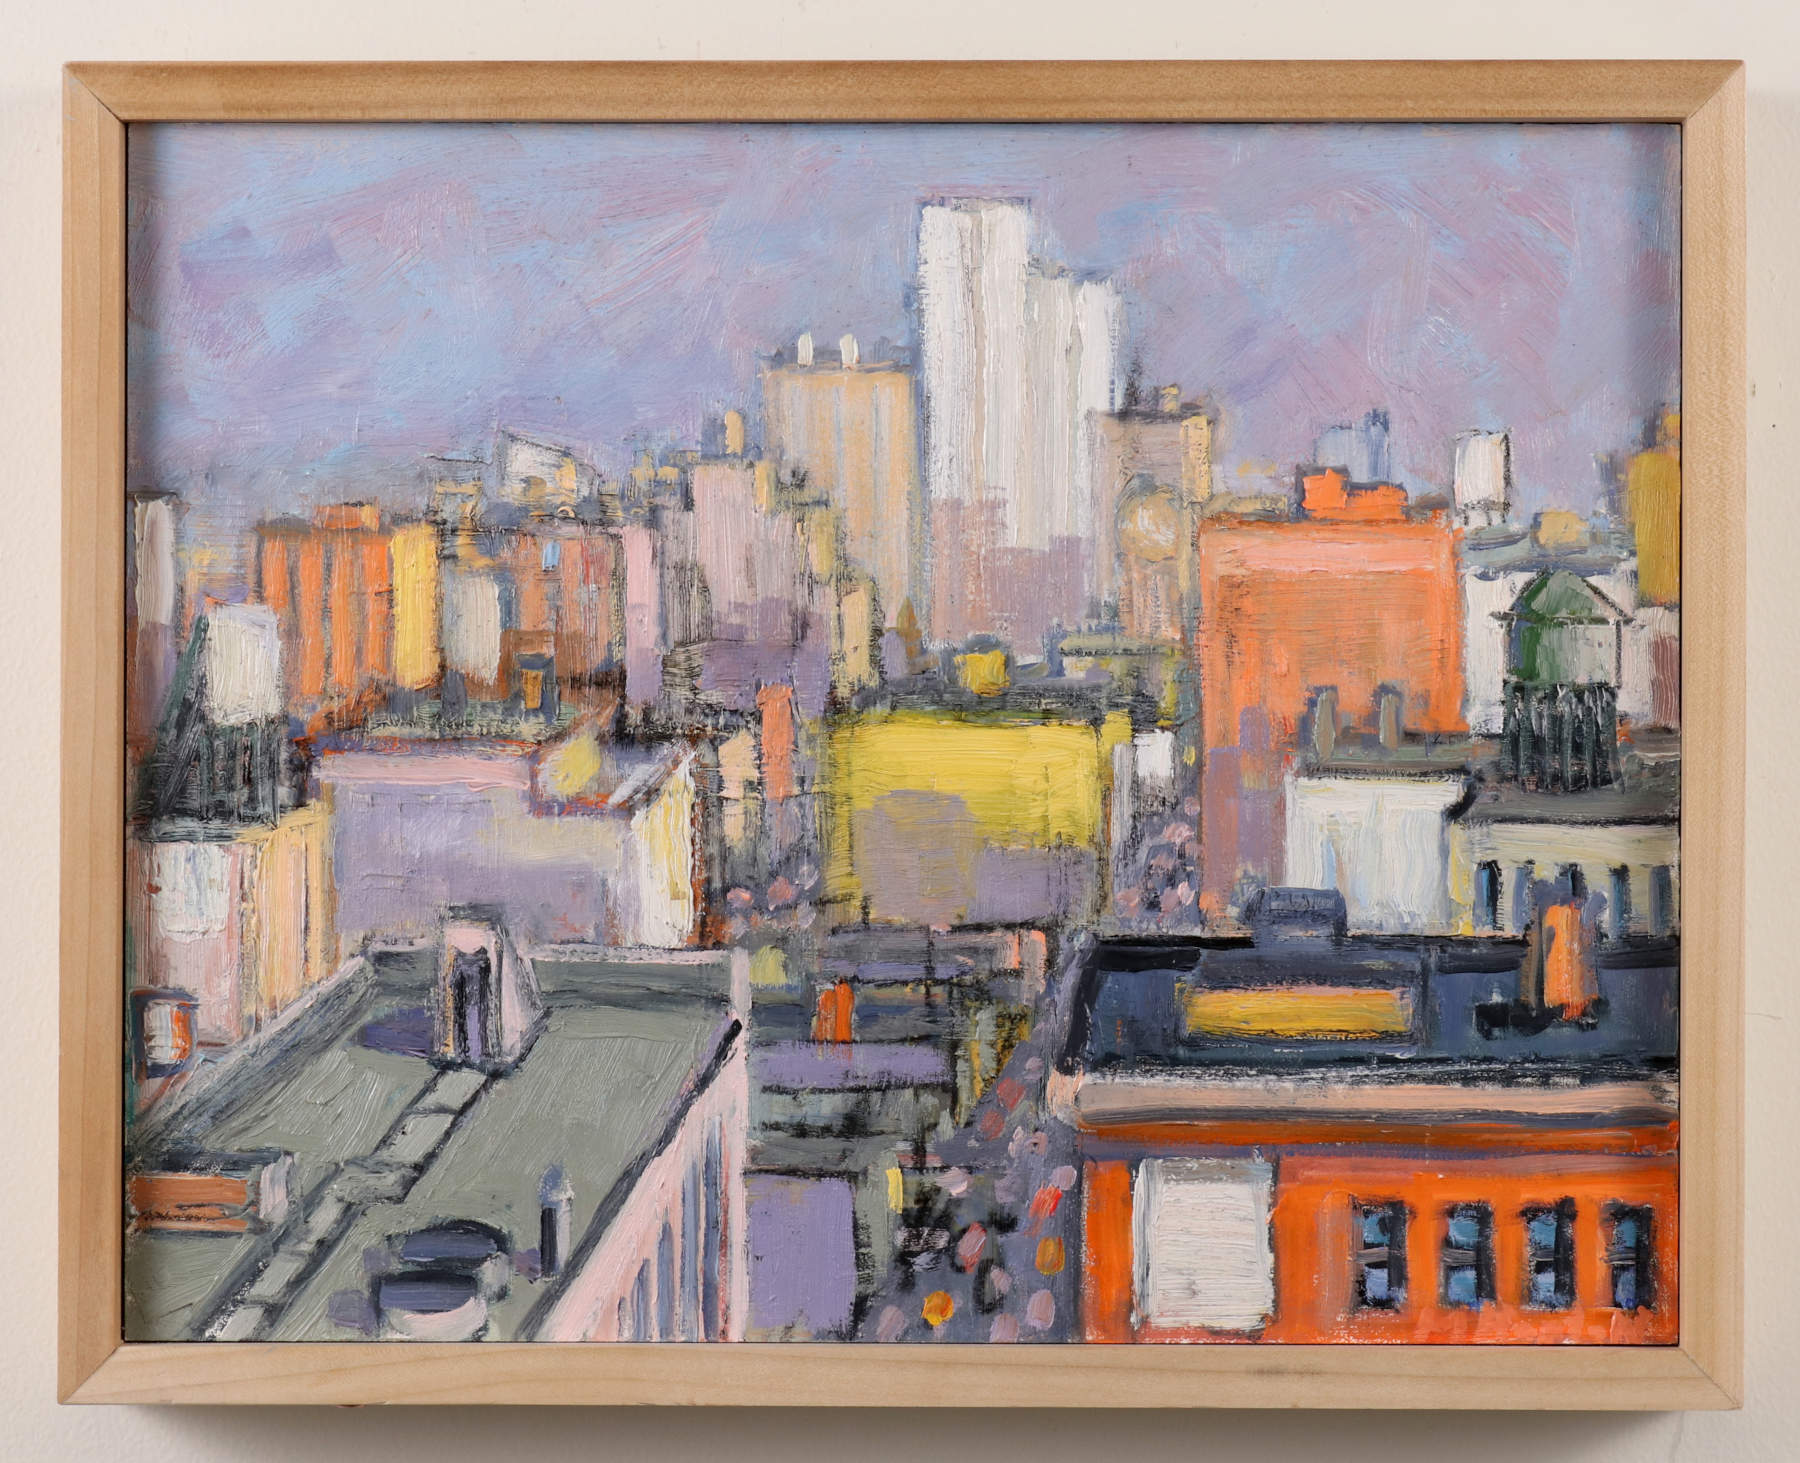 Mark Horton (b. 1953) "Aerial View of City" 11" x 14"